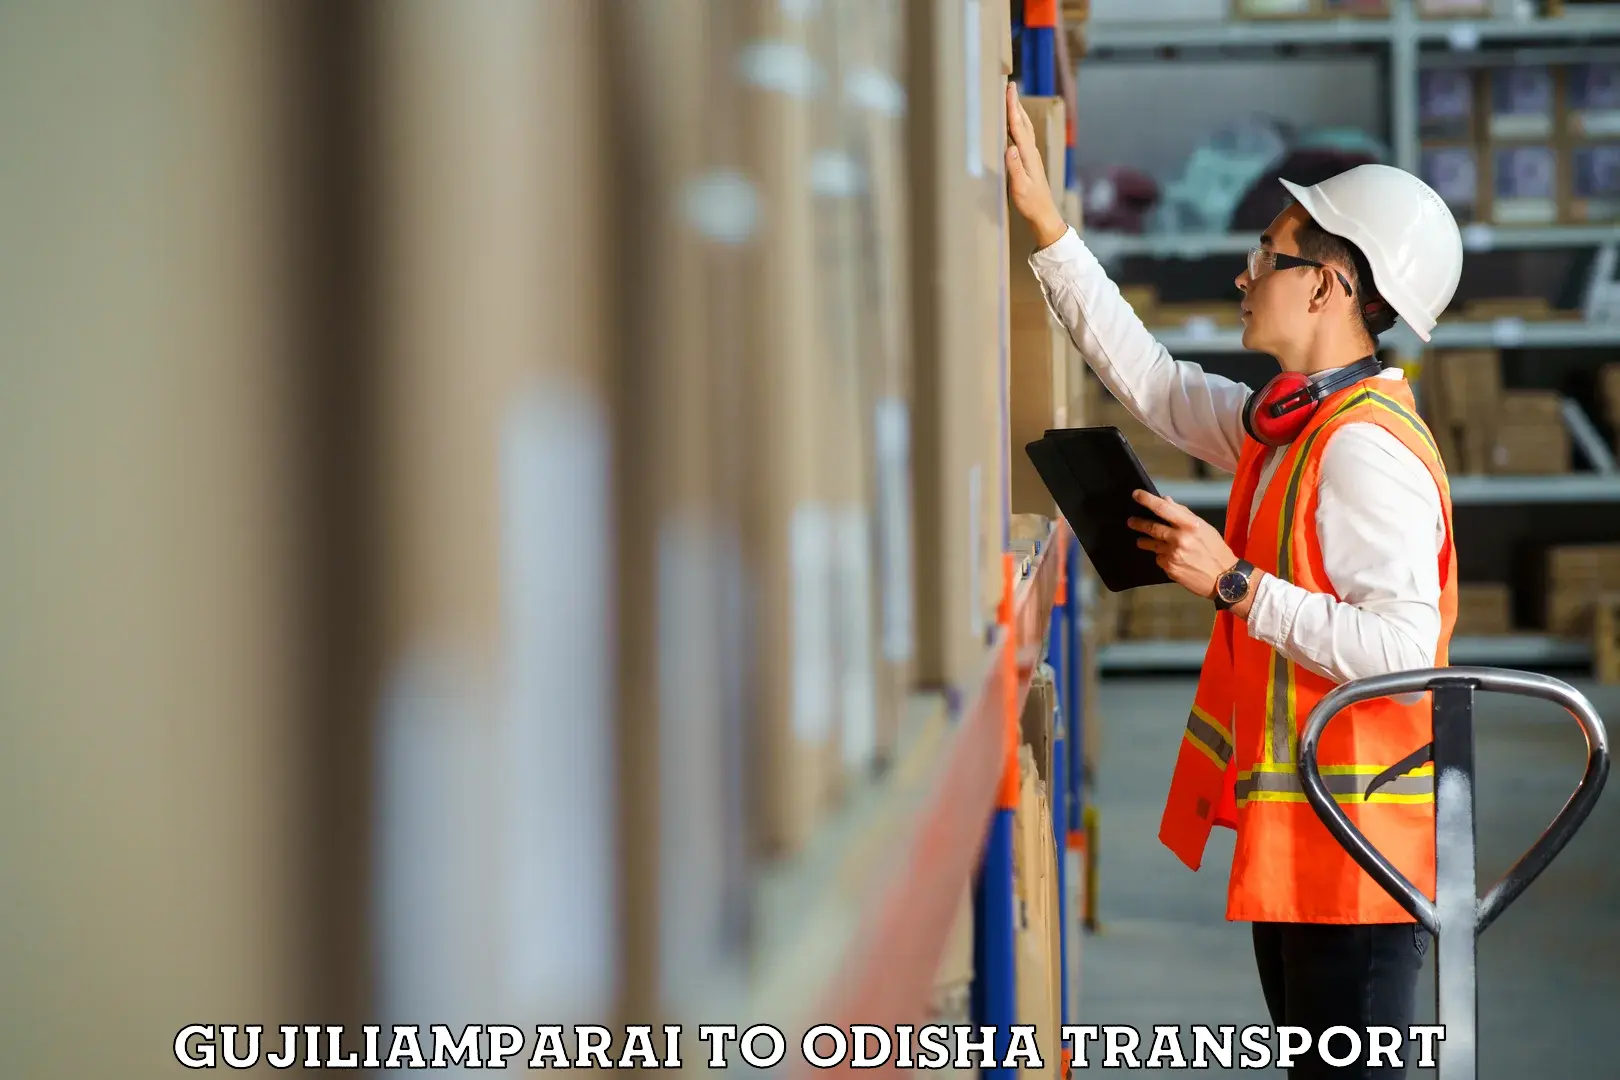 Commercial transport service Gujiliamparai to Dandisahi